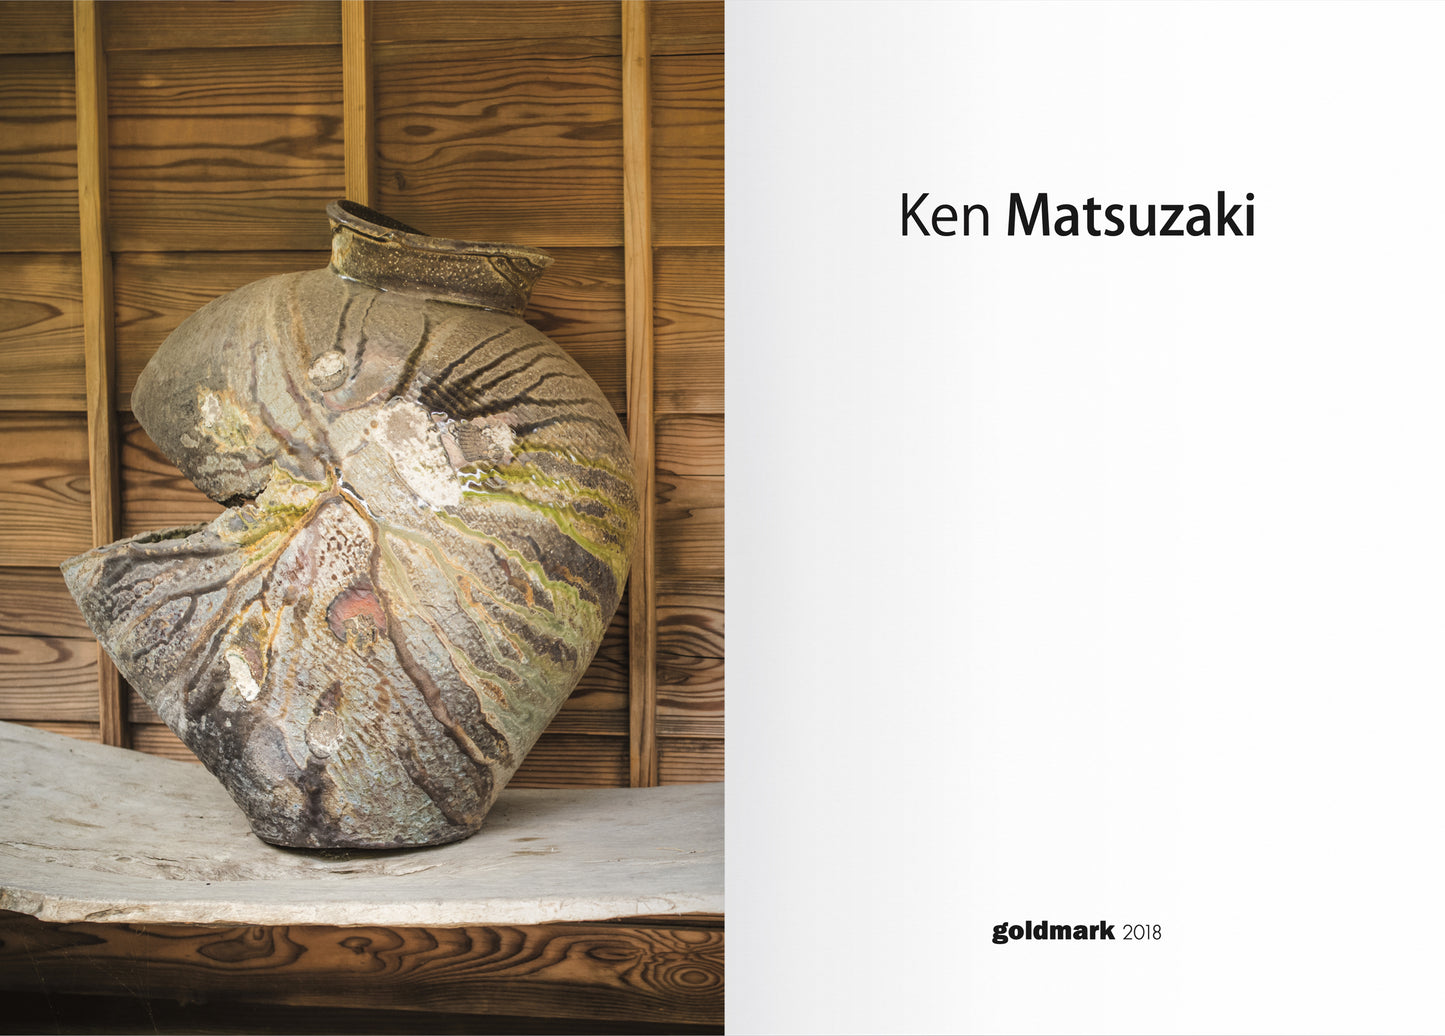 Ken Matsuzaki - The Intangible Spirit